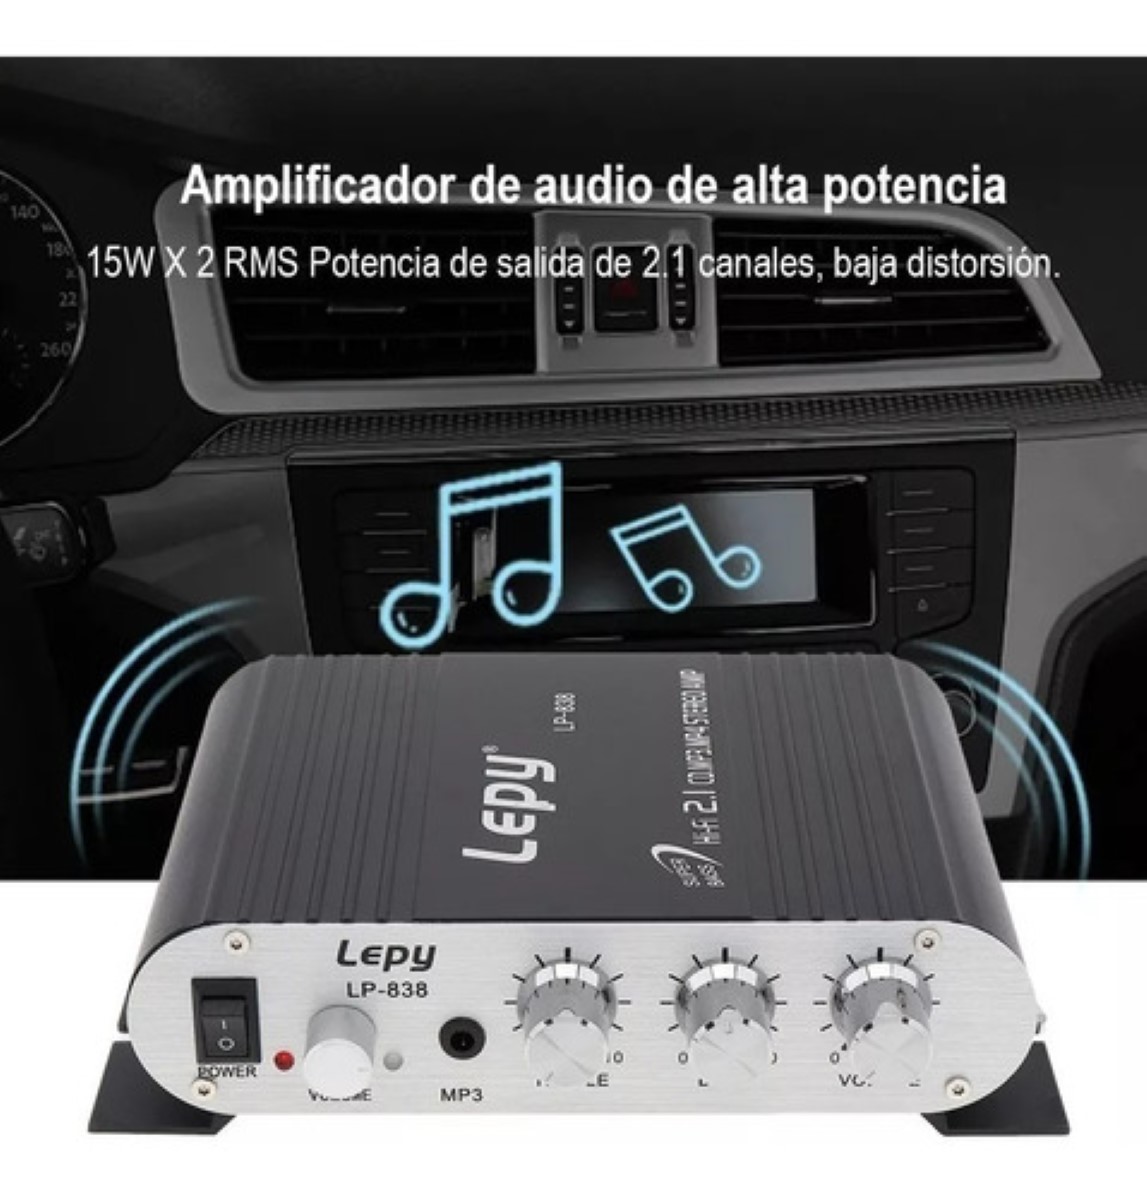 Amplificador de potencia de audio, 2 x 15 W + 20 W Hi-Fi 2.1CH HiFi Stereo  Subwoofer Amp Home Bass Amplificador de potencia de audio amplificador